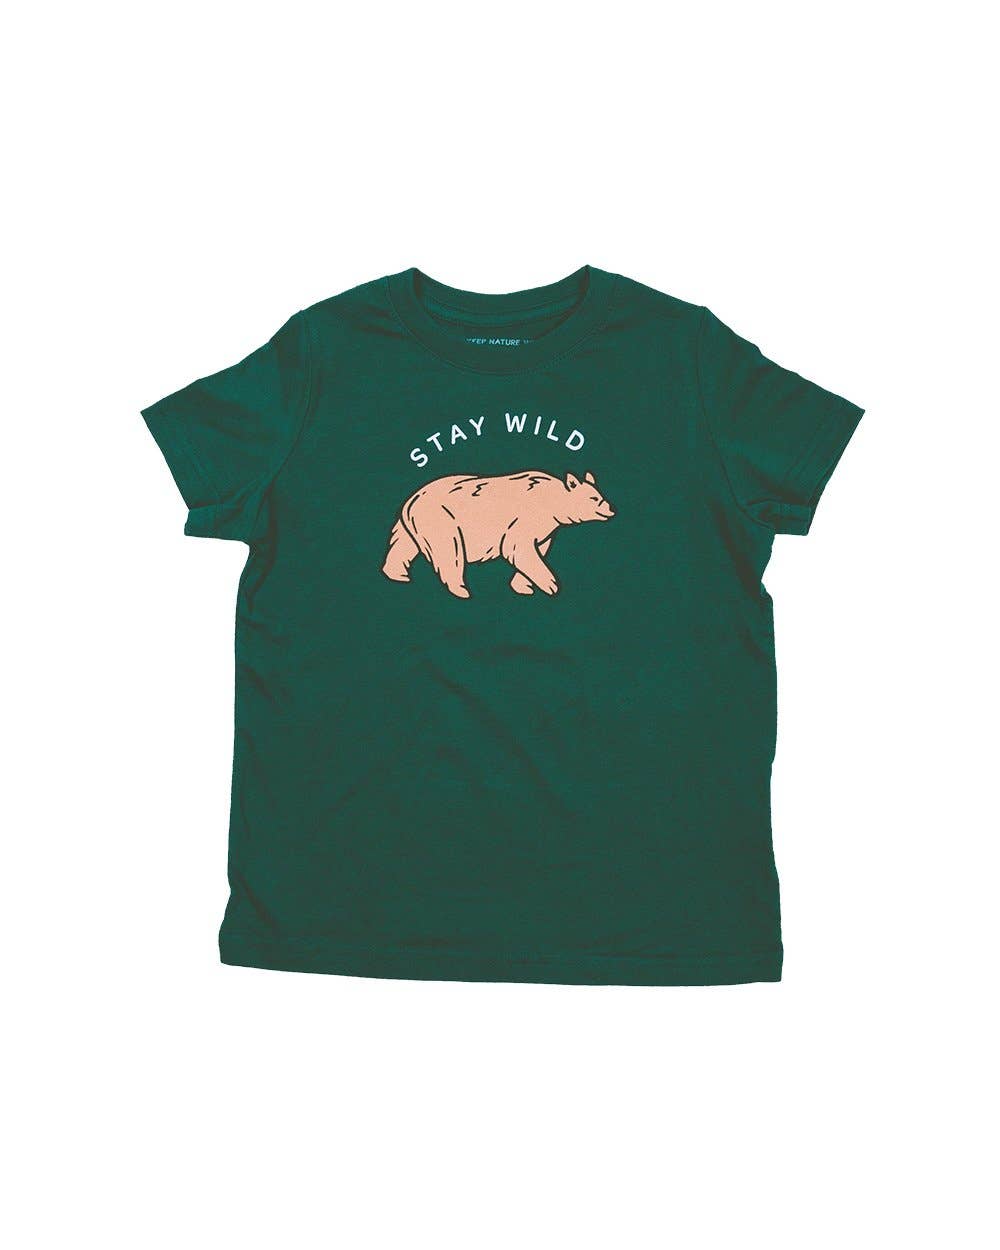 Dark Green Stay Wild bear youth shirt by Keep Nature Wild